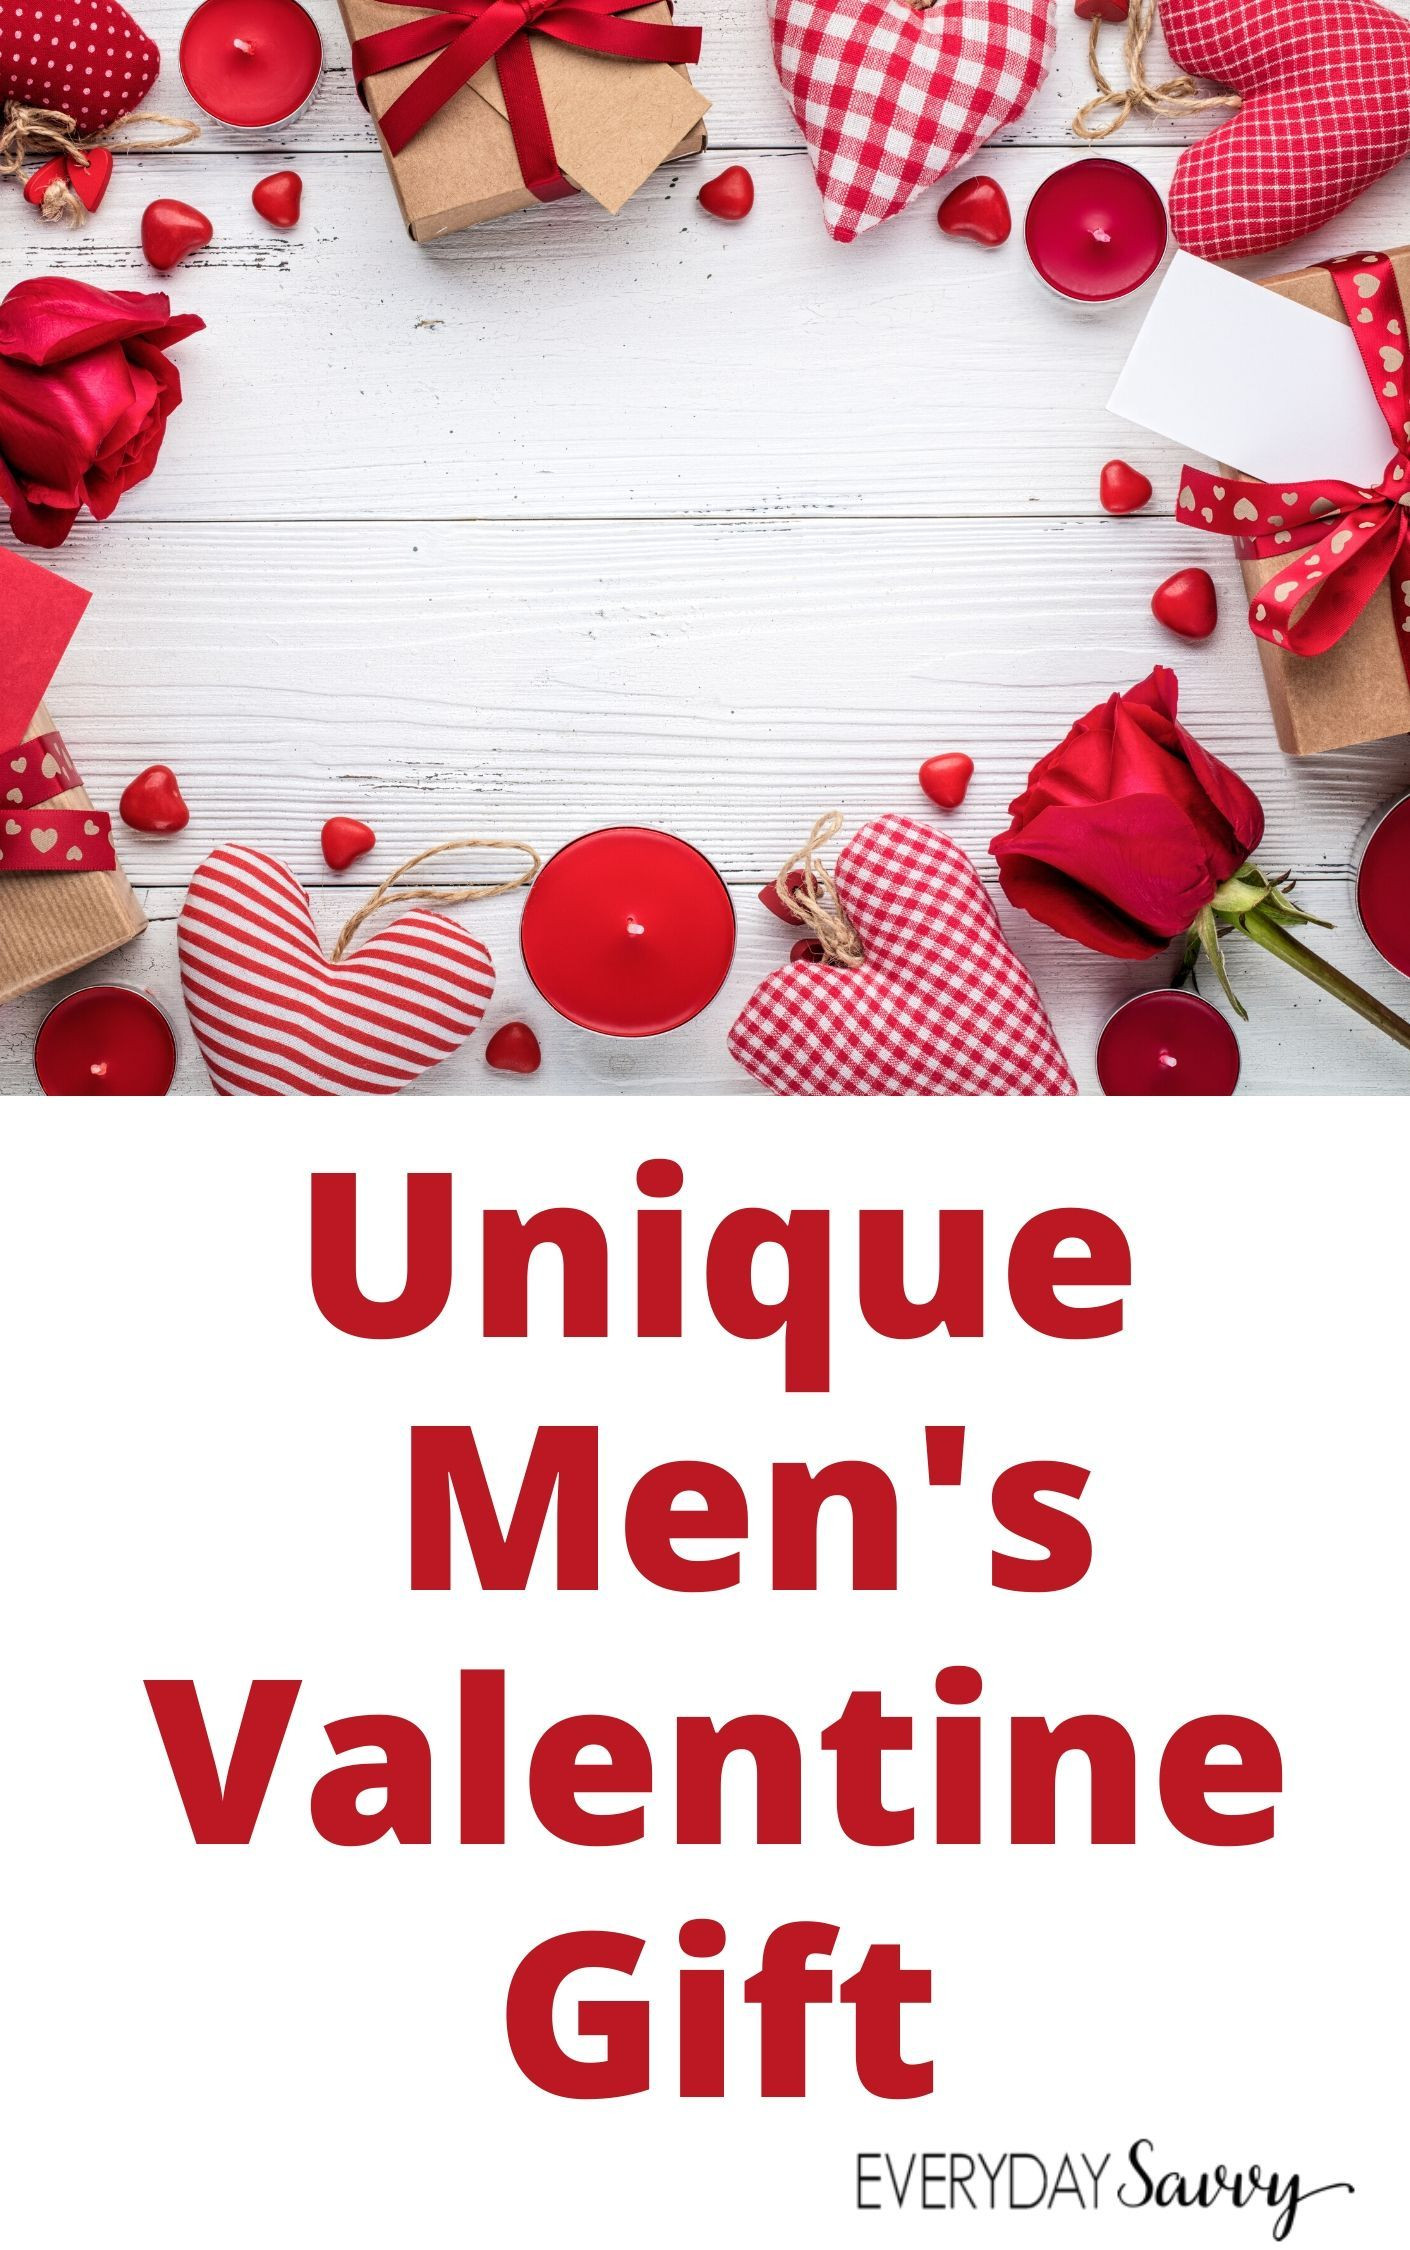 Cool Valentines Gift Ideas For Men
 Unique Valentine s Day t ideas for Men